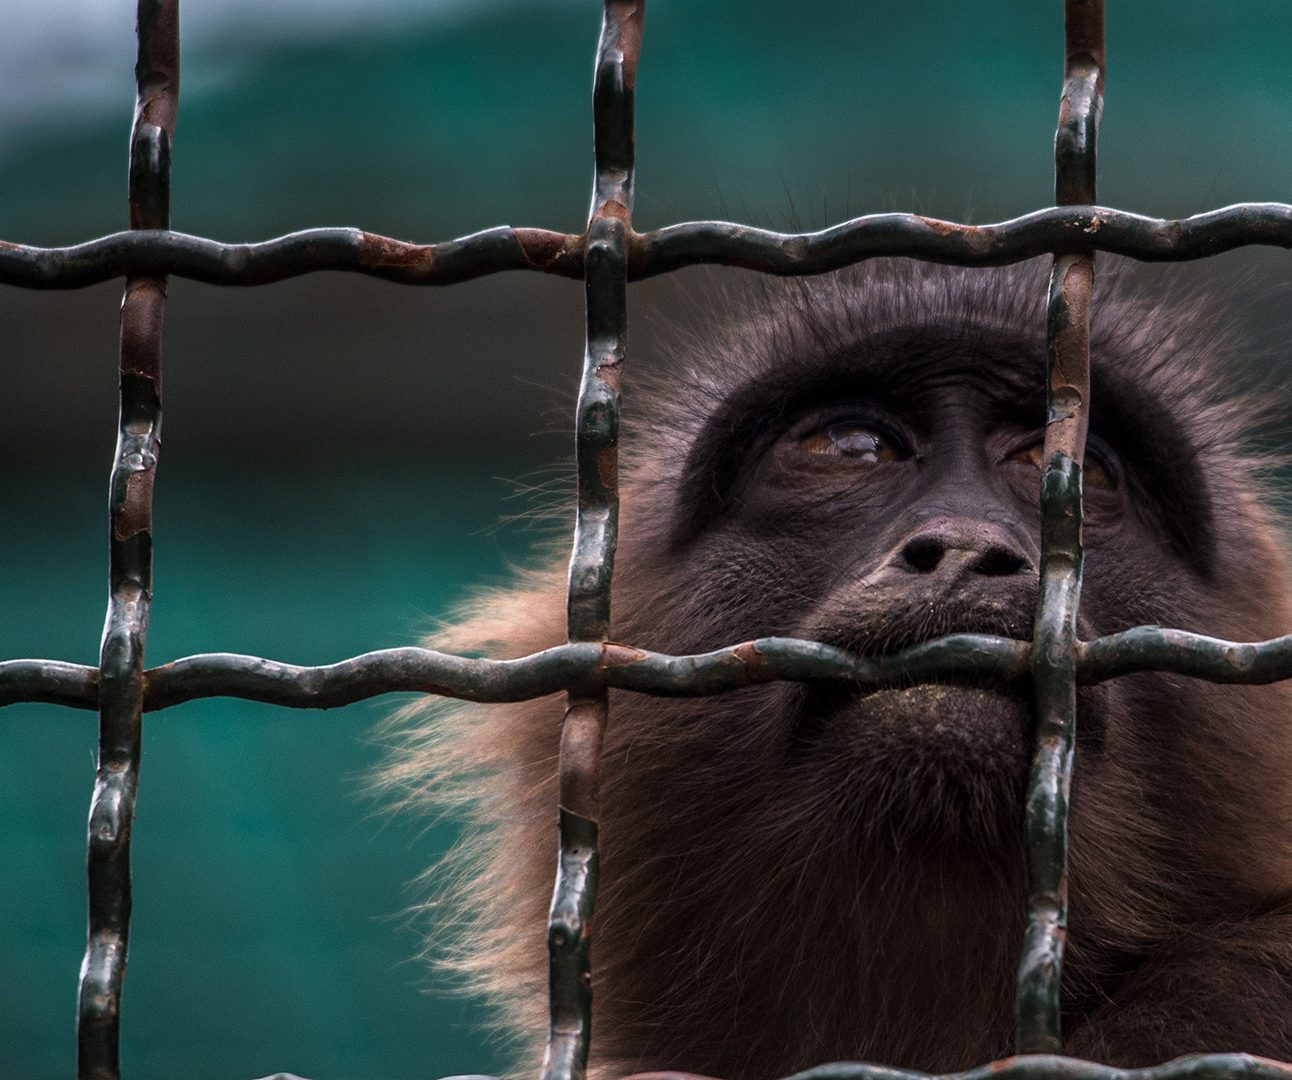 A monkey looks through metal bars